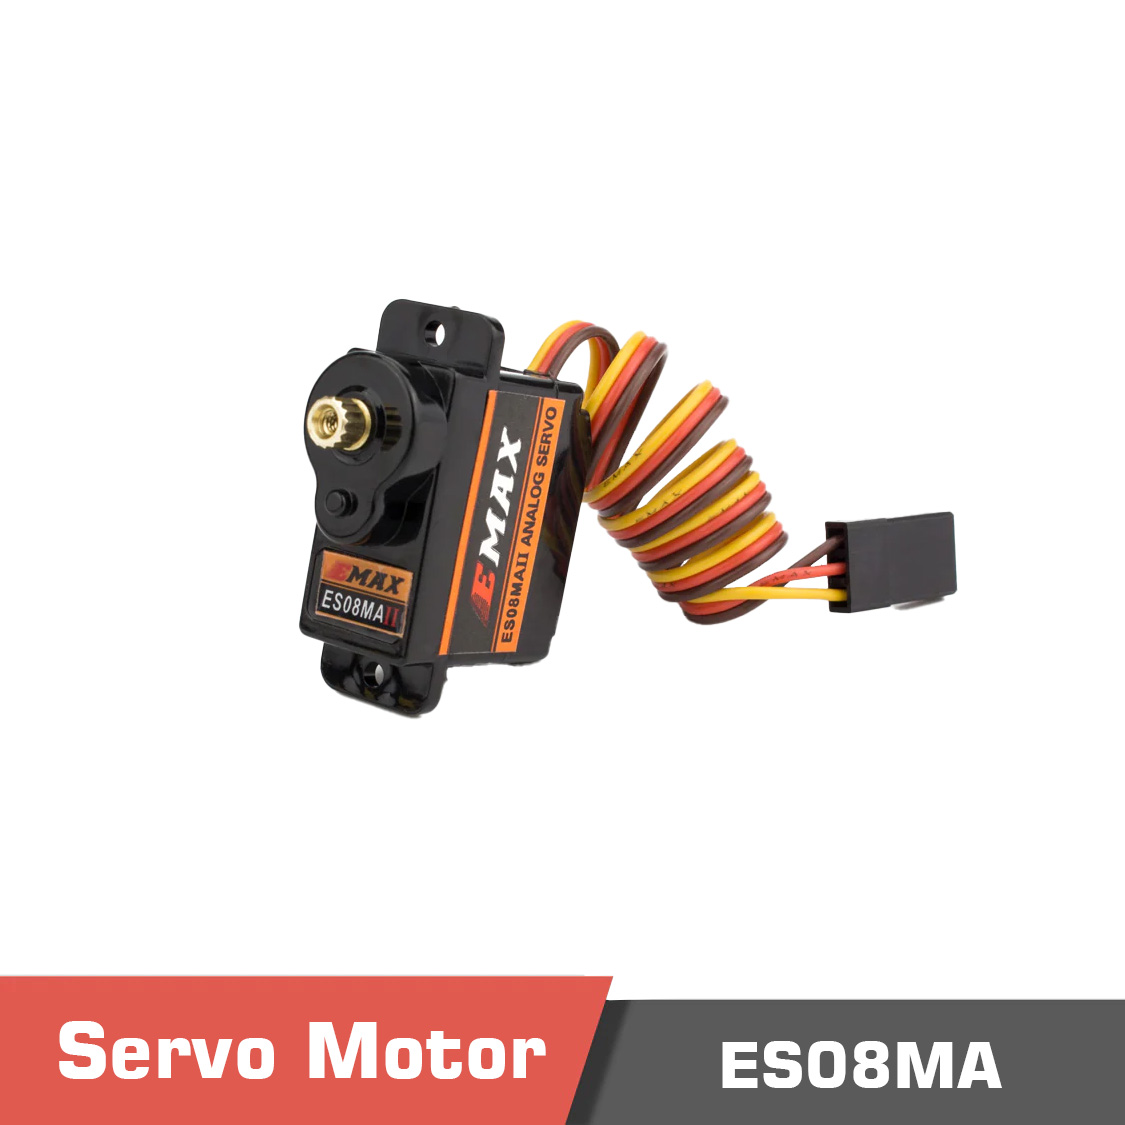 Es08ma3 - sst-71,sst-71 soldering connector,soldering connector - motionew - 2